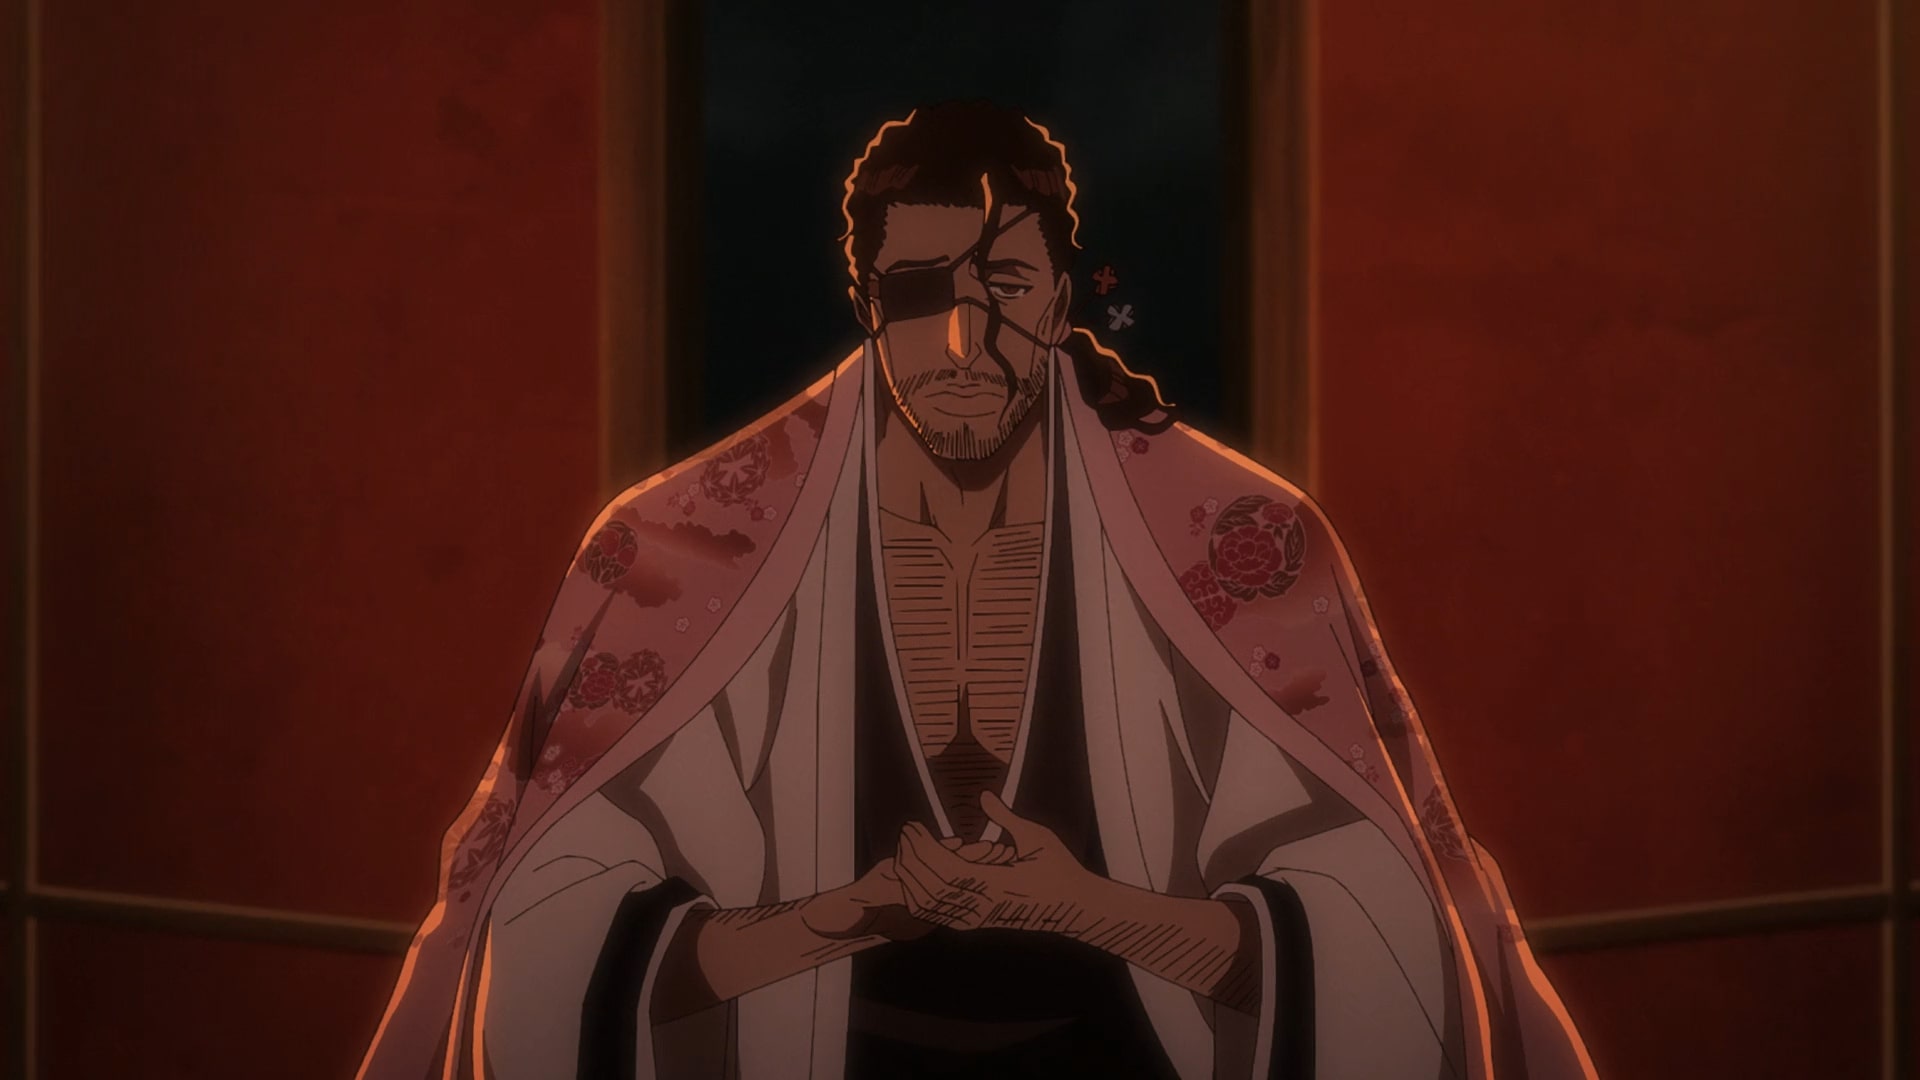 Bleach Thousand Year Blood War episode 8 review: Ichigo heads to